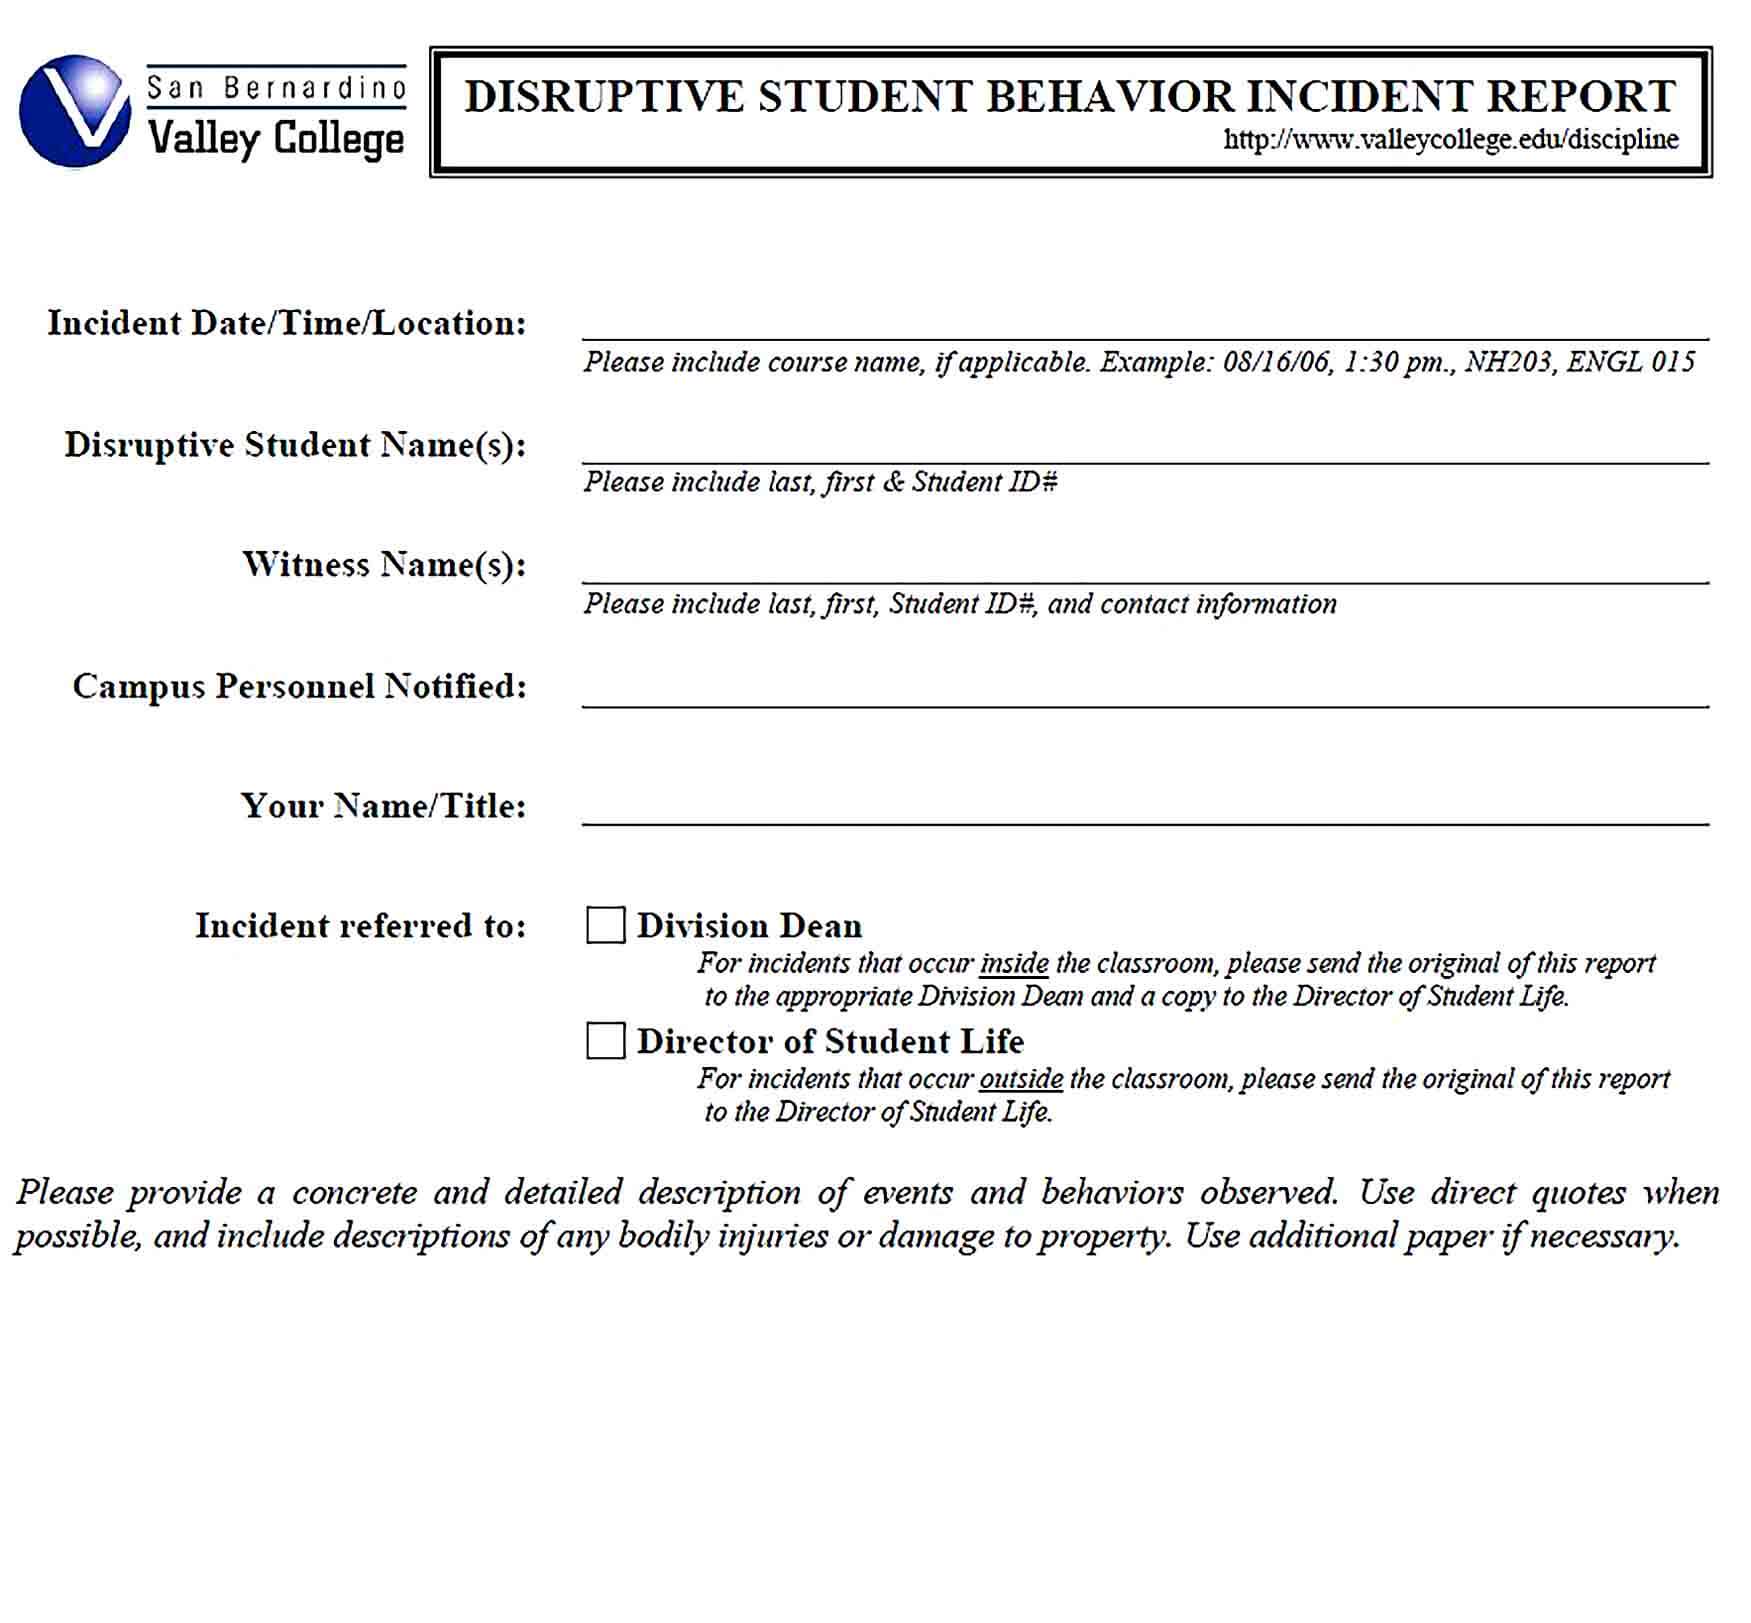 Sample Disruptive Student Behavior Incident Report Template